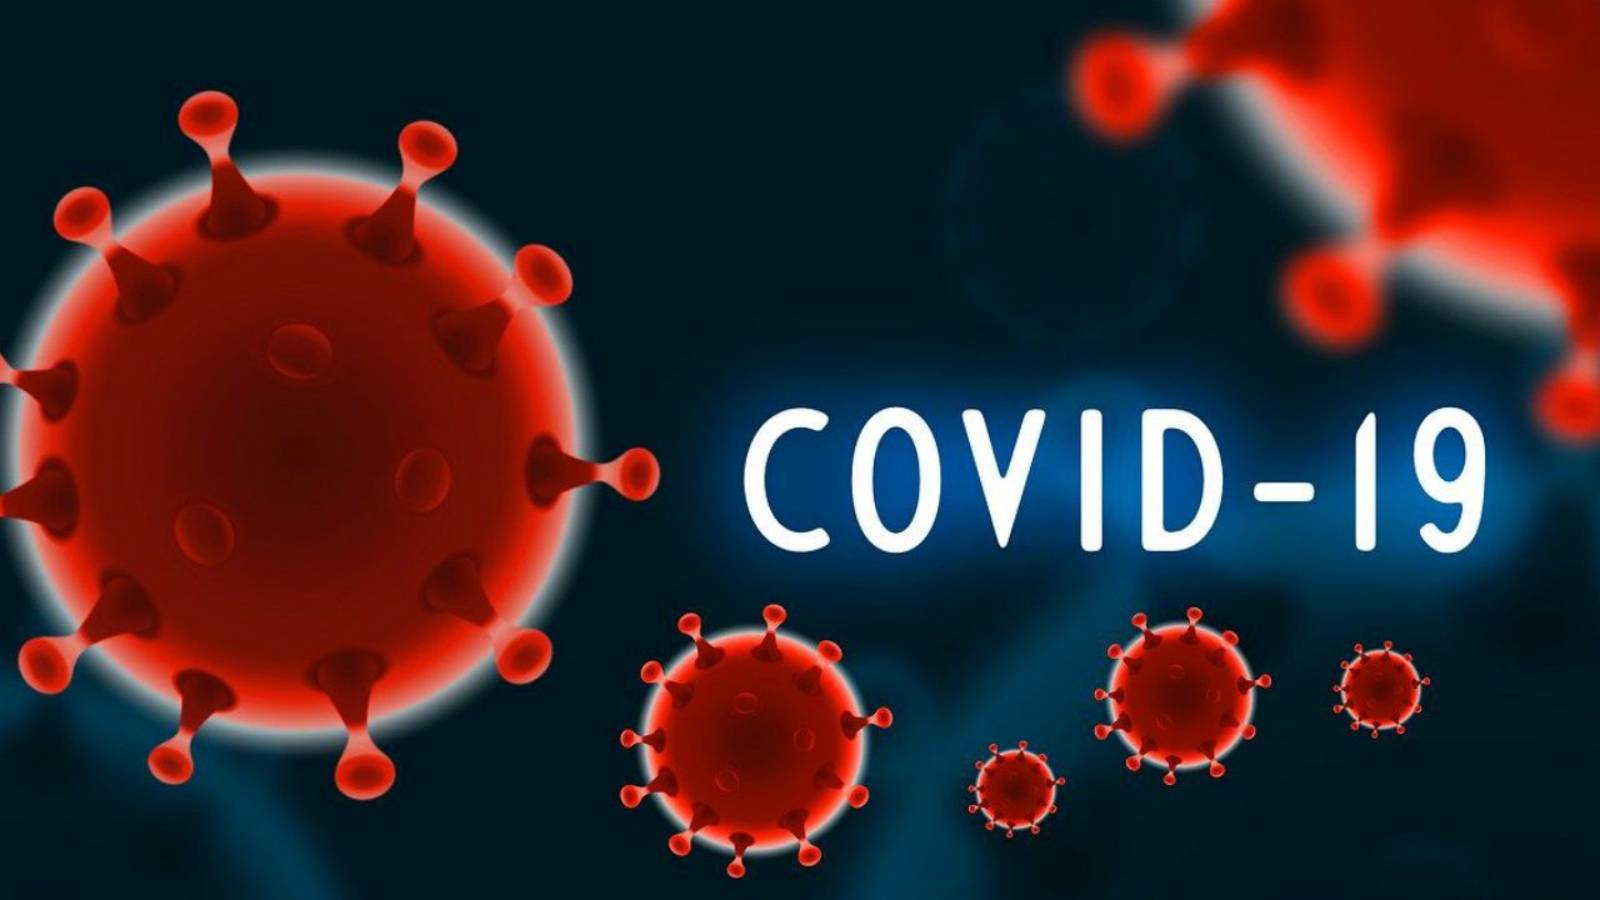 COVID-19 Romania Incidence rates for the Coronavirus on December 21, 2020